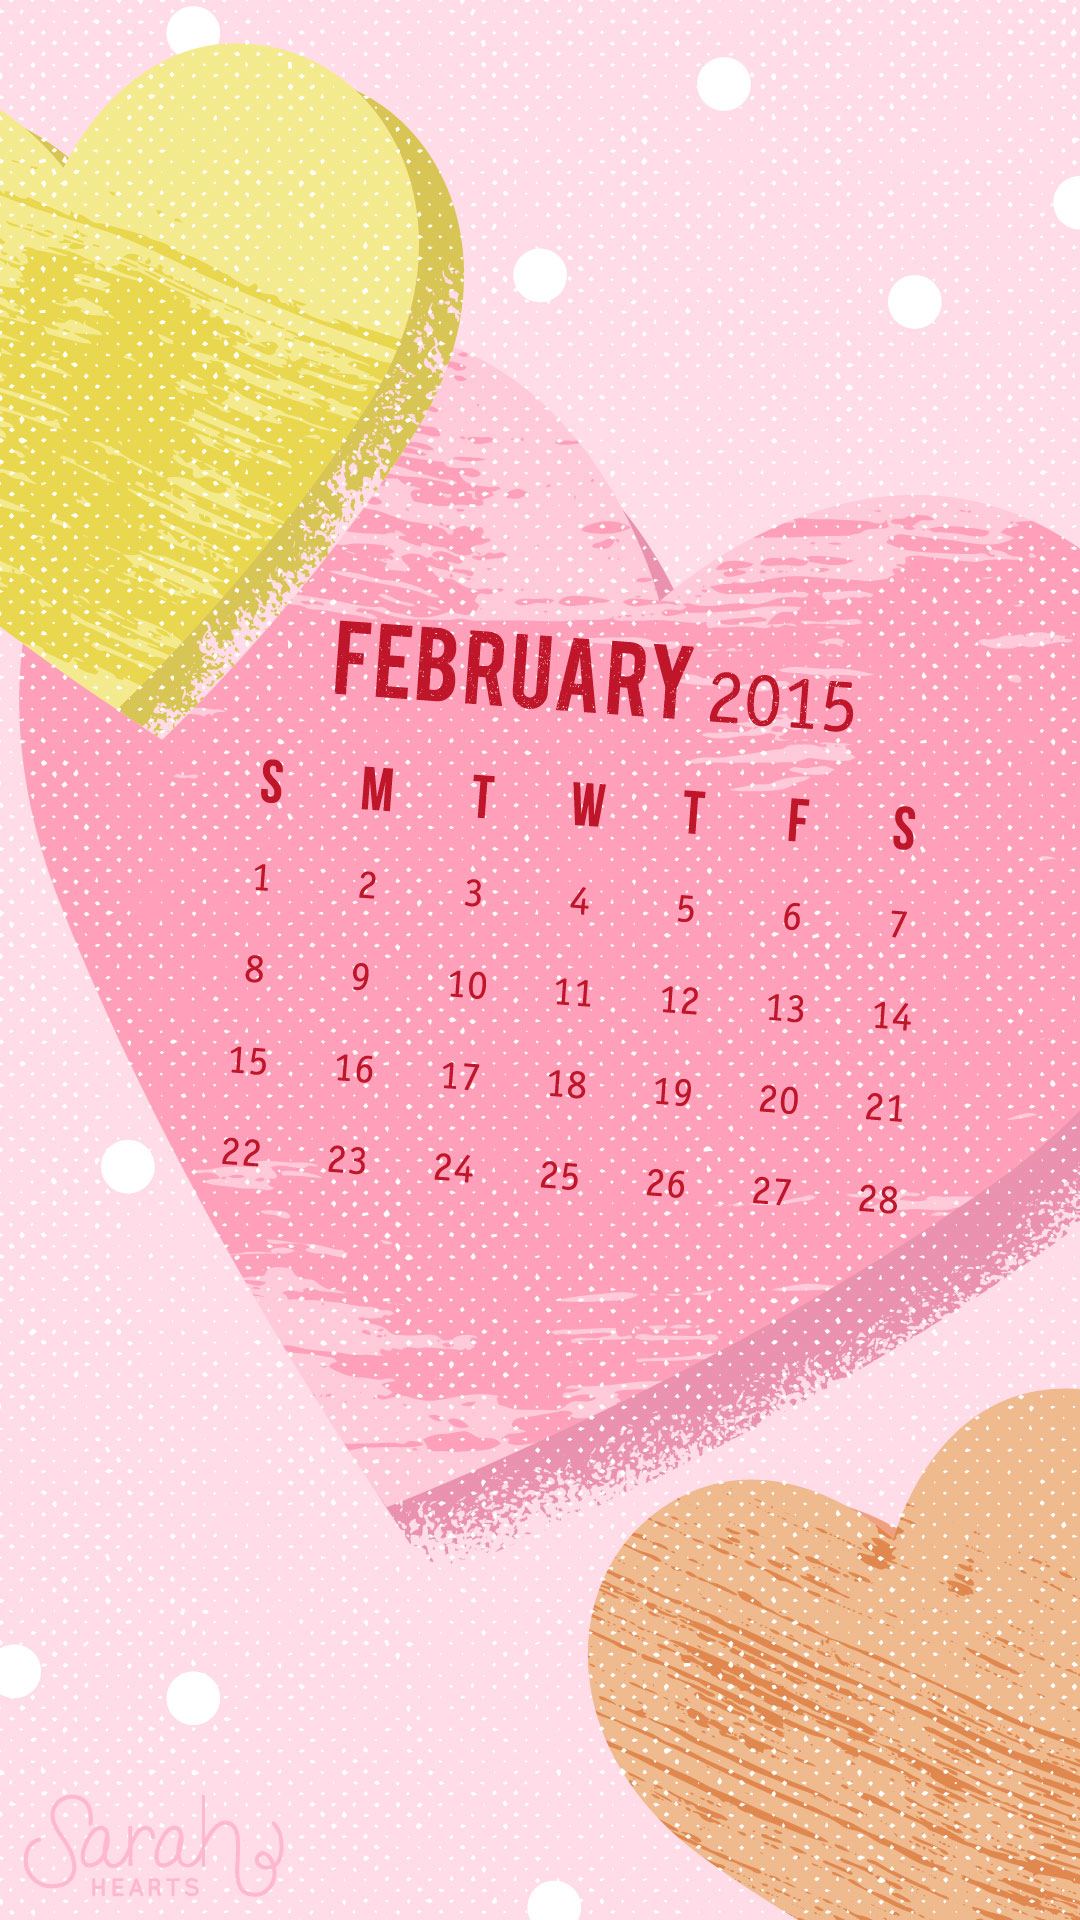 February 2015 Calendar Wallpaper - Sarah Hearts